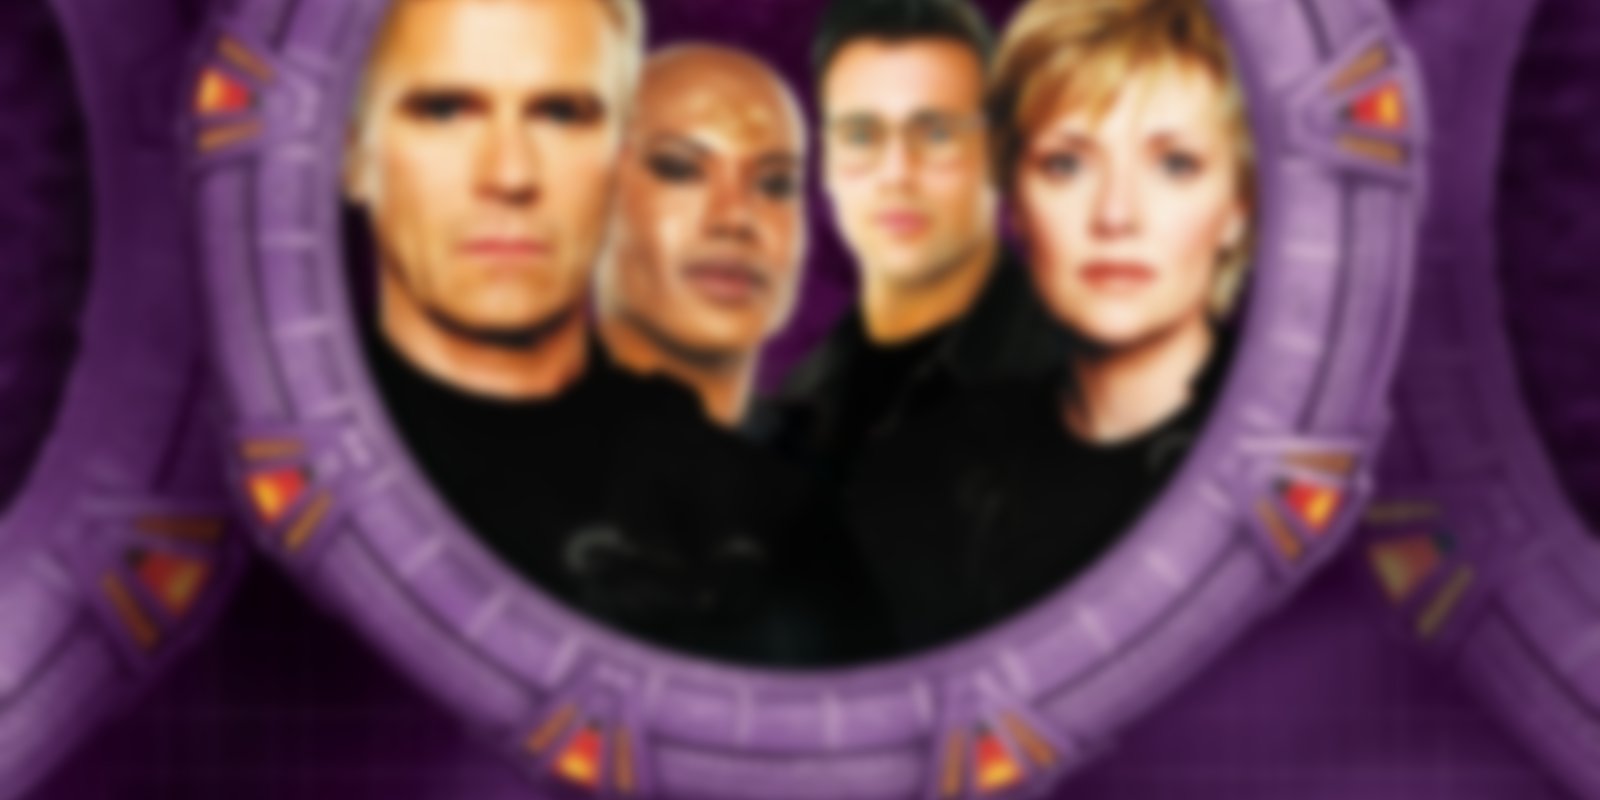 Stargate: Kommando SG-1 - Staffel 5